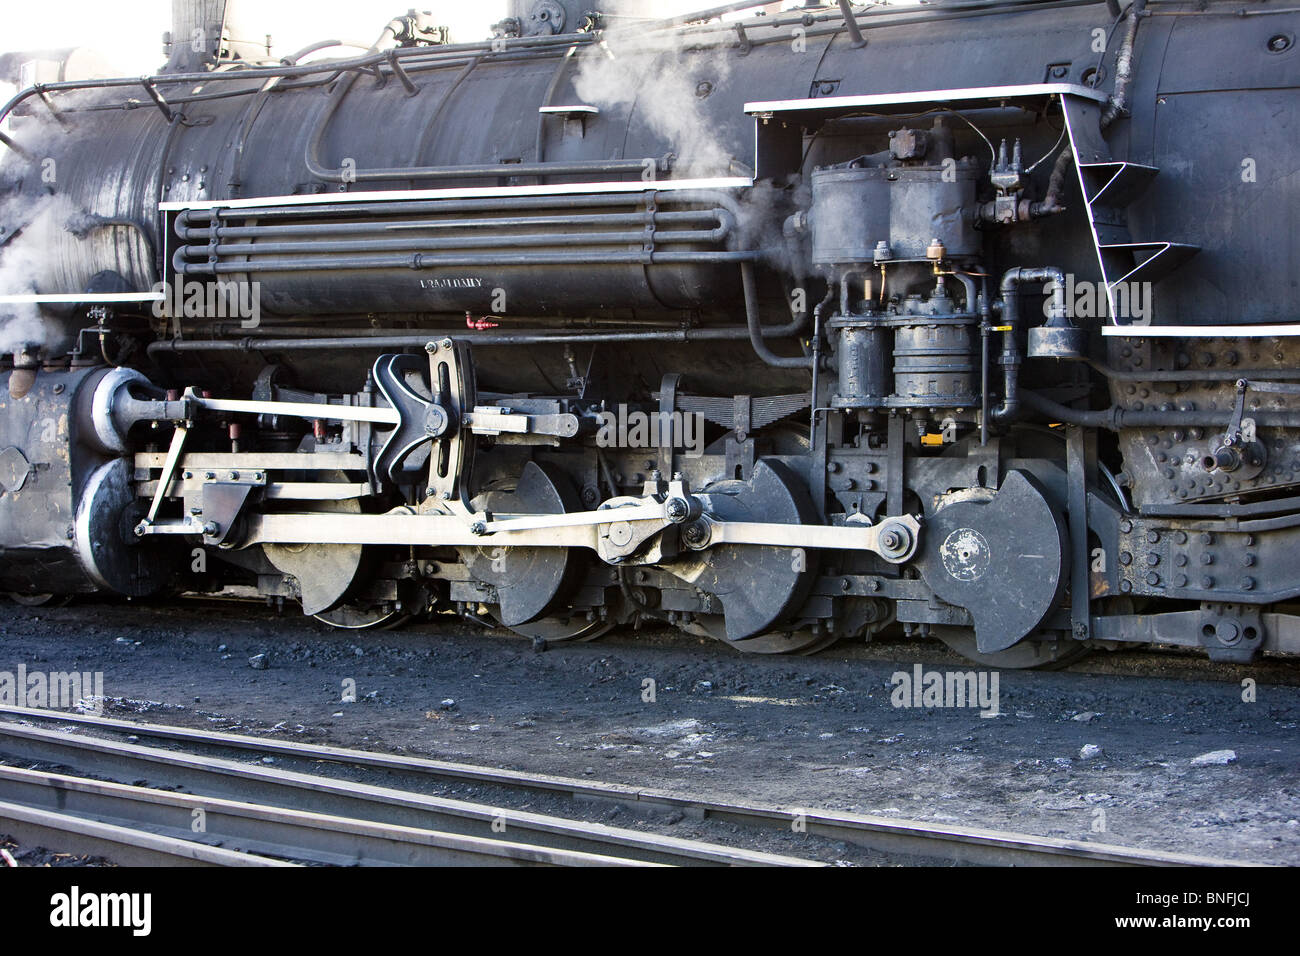 Durango Silverton Narrow Gauge Railroad, Colorado, USA Stock Photo